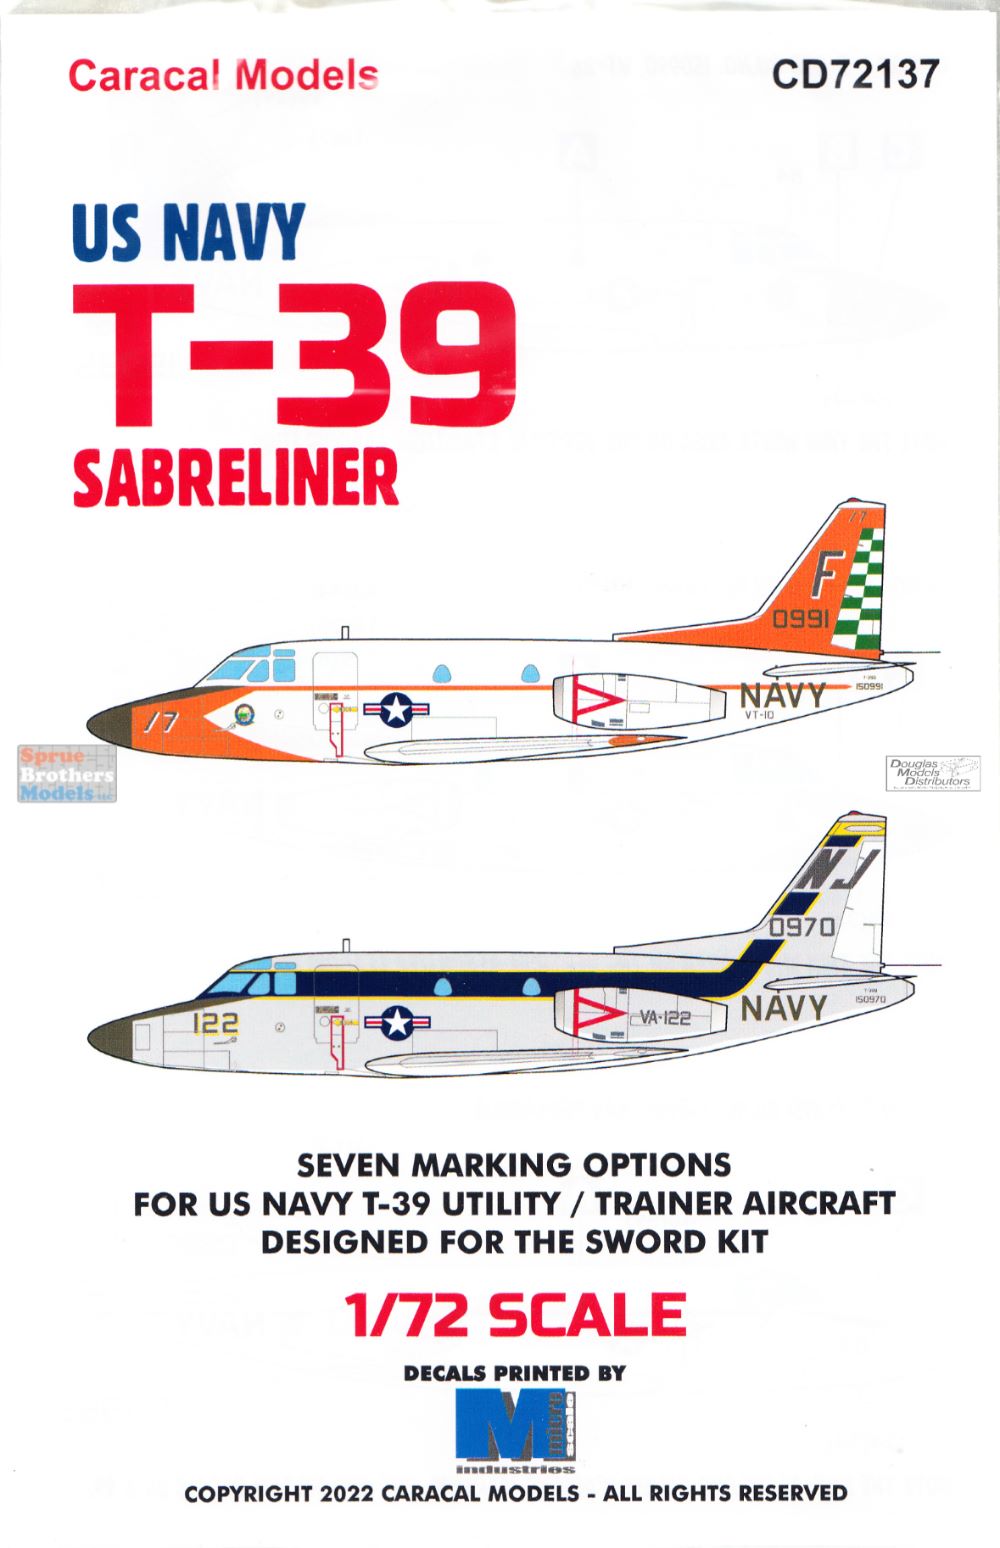 CARCD72137 1:72 Caracal Models Decals - US Navy T-39 Sabreliner